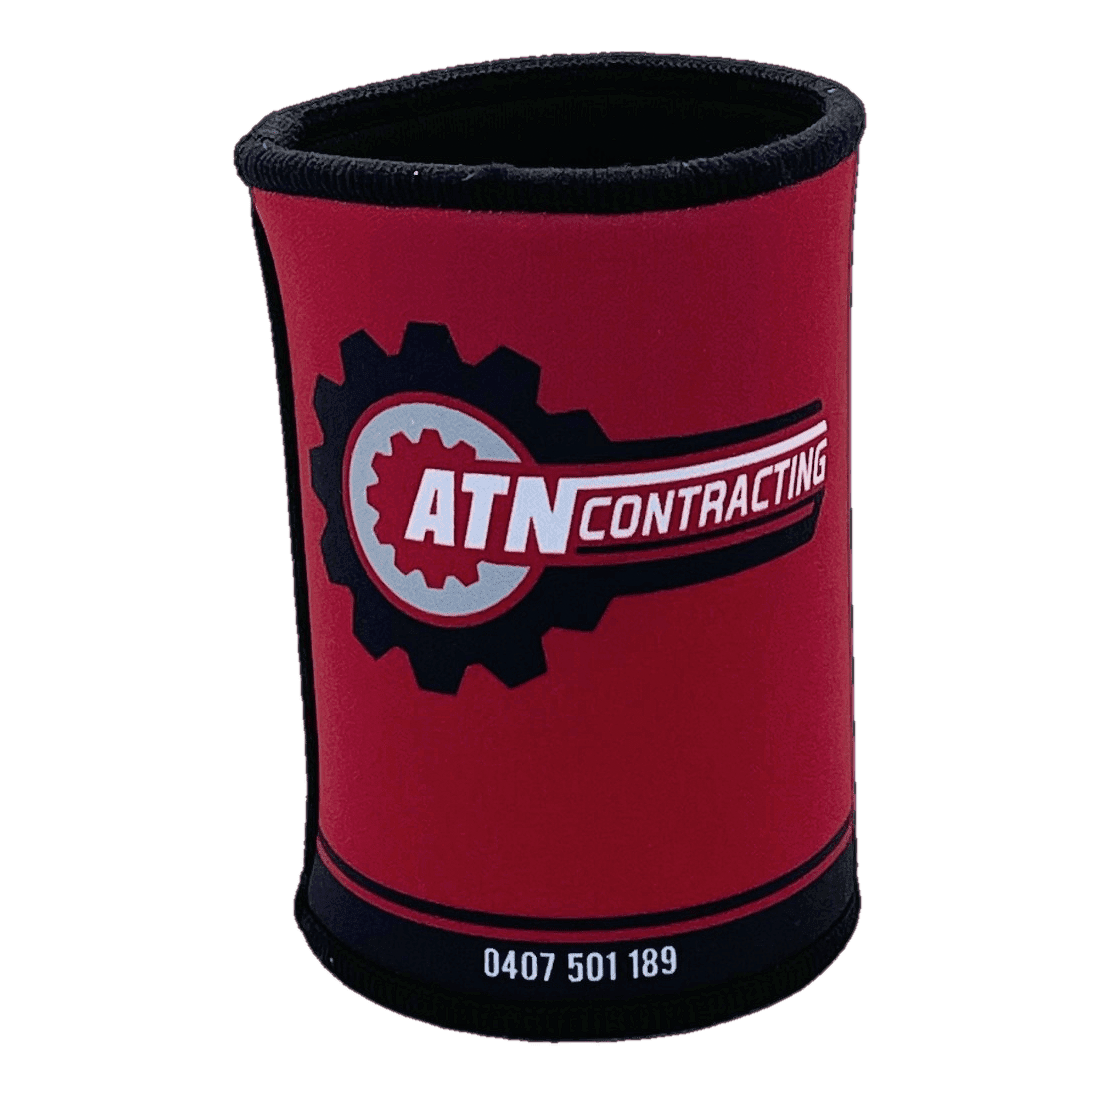 ATN Contracting Custom Stubby Holder